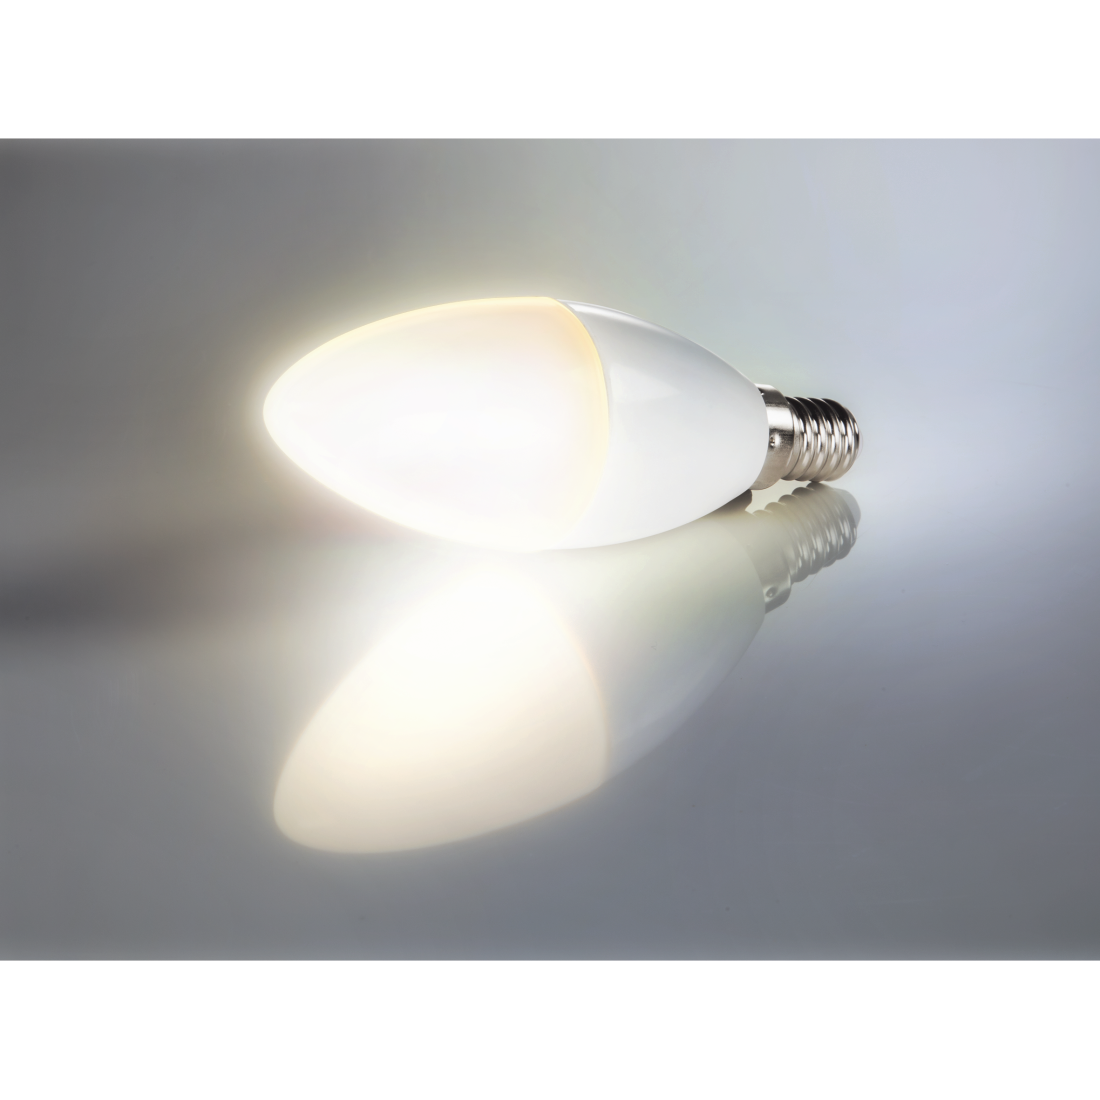 abx4 Druckfähige Abbildung 4 - Xavax, LED-Lampe, E14, 806lm ersetzt 60W, Kerzenlampe, Warmweiß